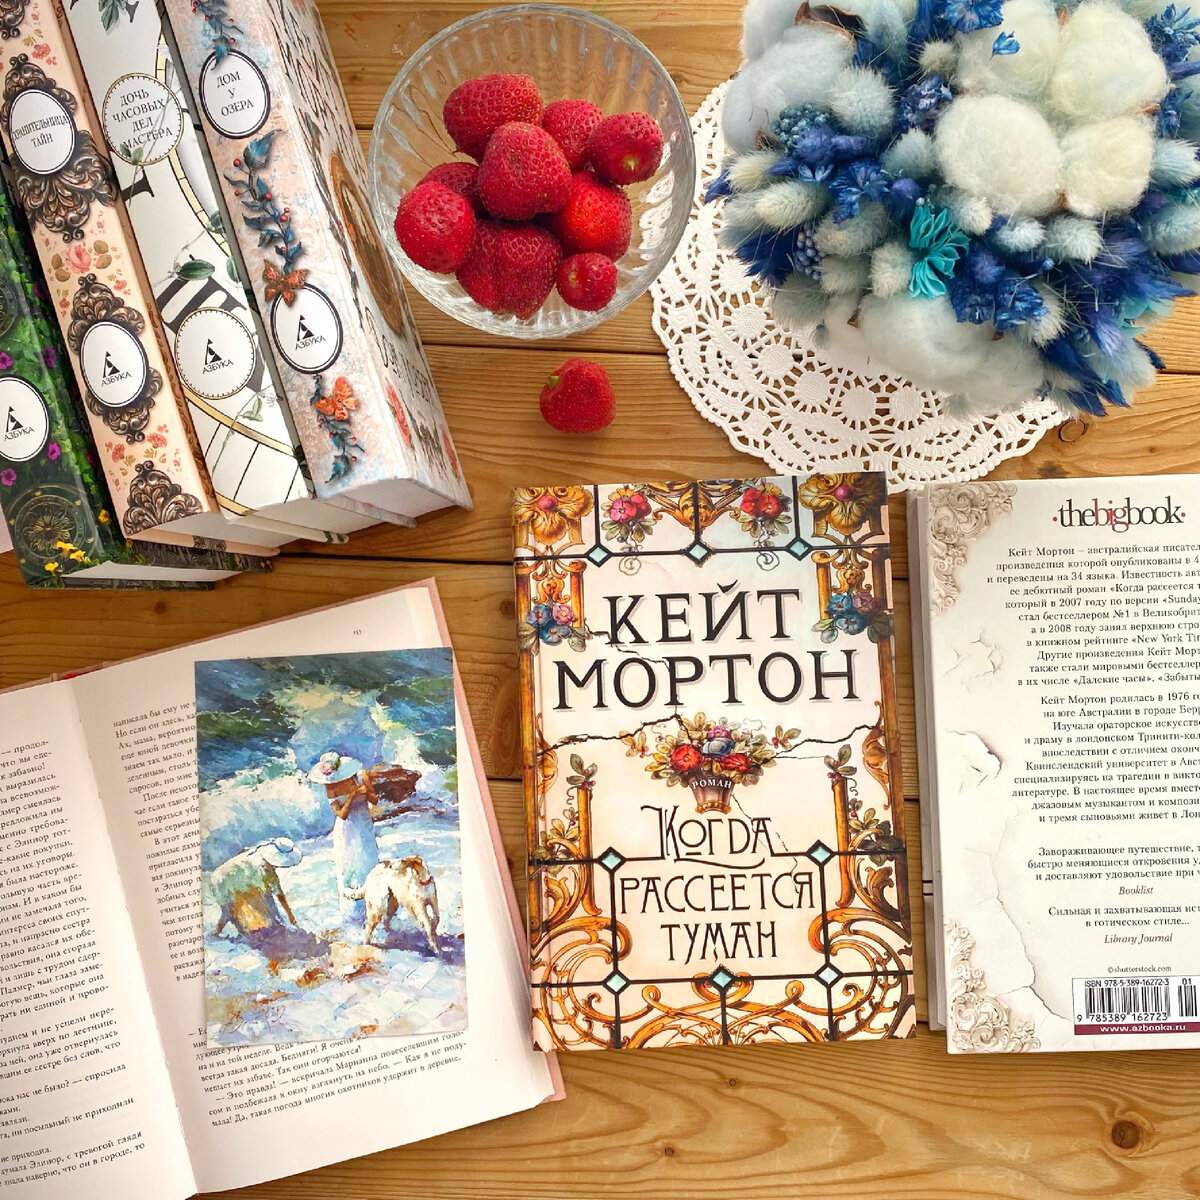 Кейт мортон когда рассеется туман. Кейт Мортон книги. Детектив уютный английский. Кейт Мортон книга в голубой обложке.